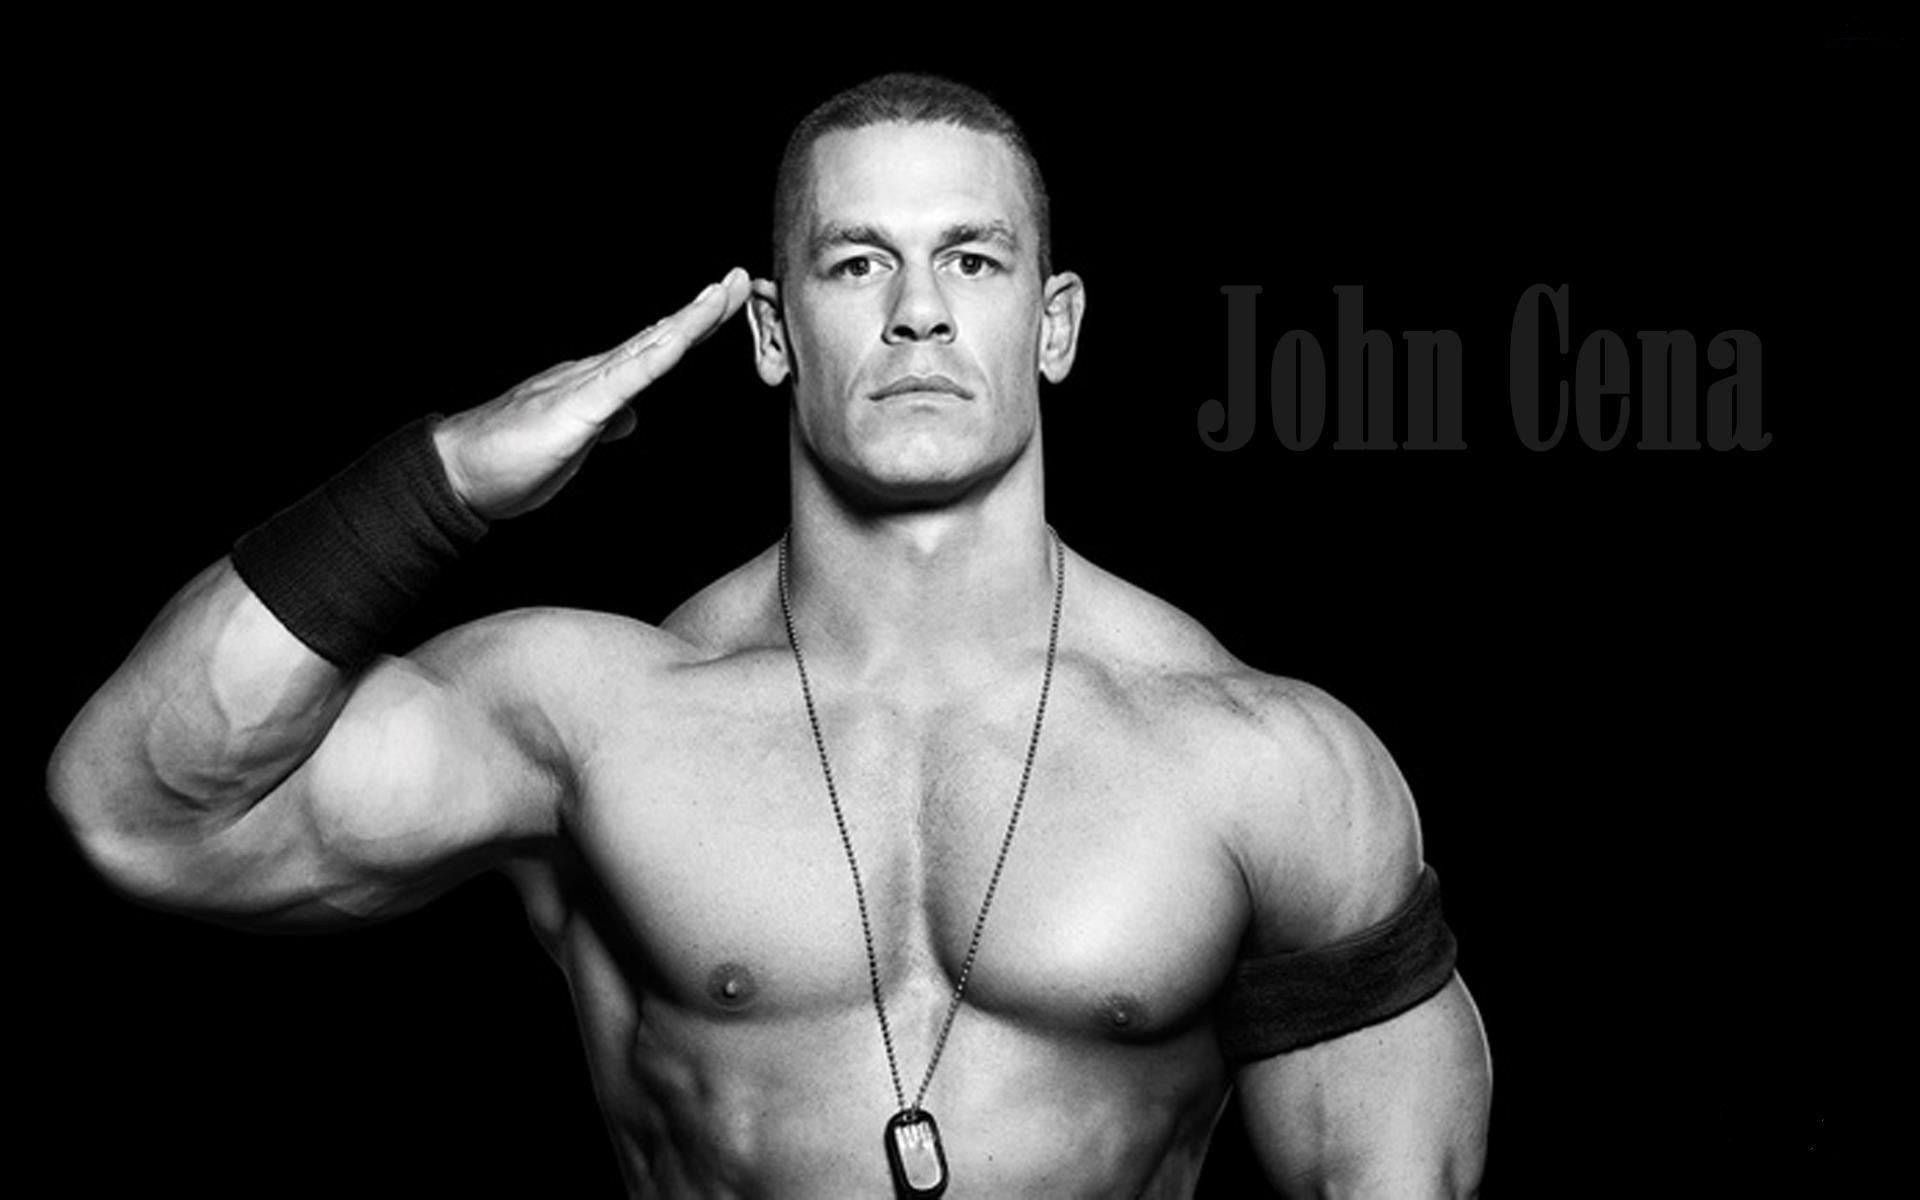 John Cena Wallpaper HD download latest John Cena Wallpaper